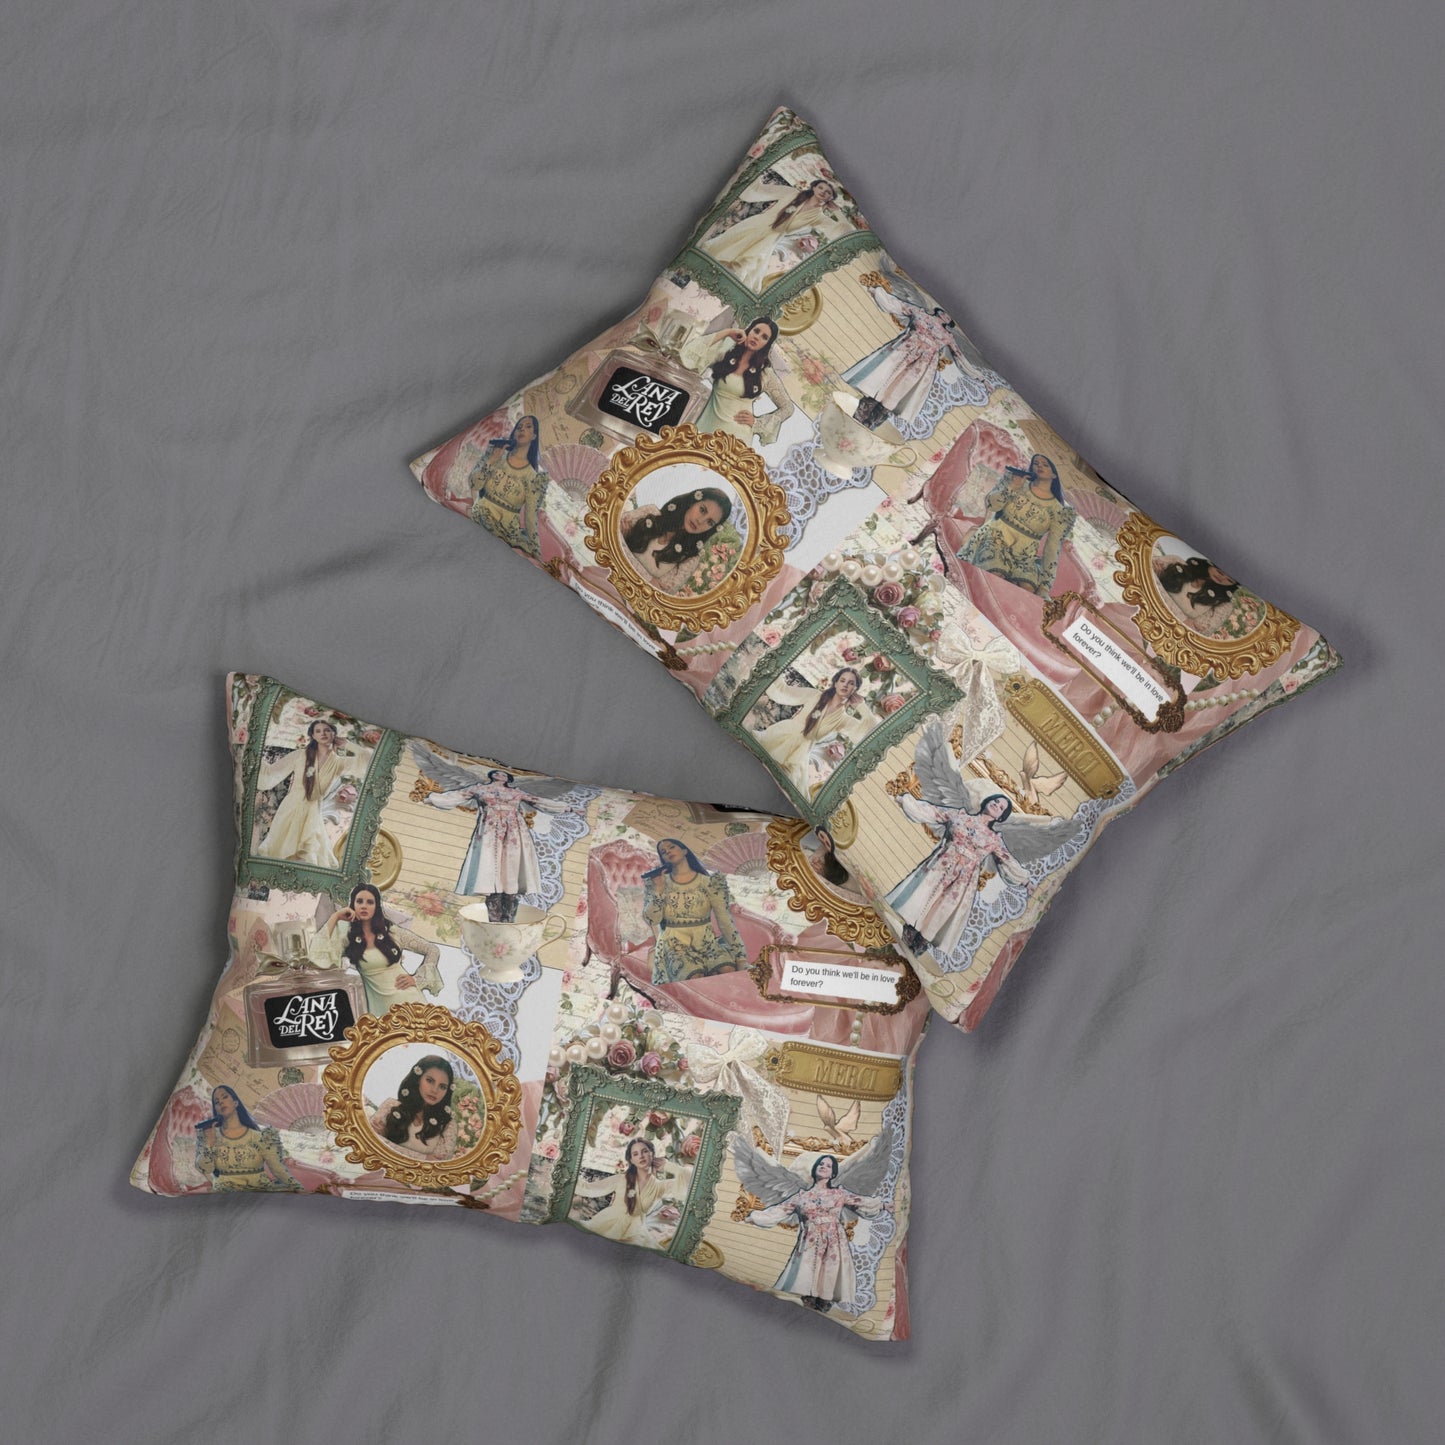 Lana Del Rey Victorian Collage Polyester Lumbar Pillow